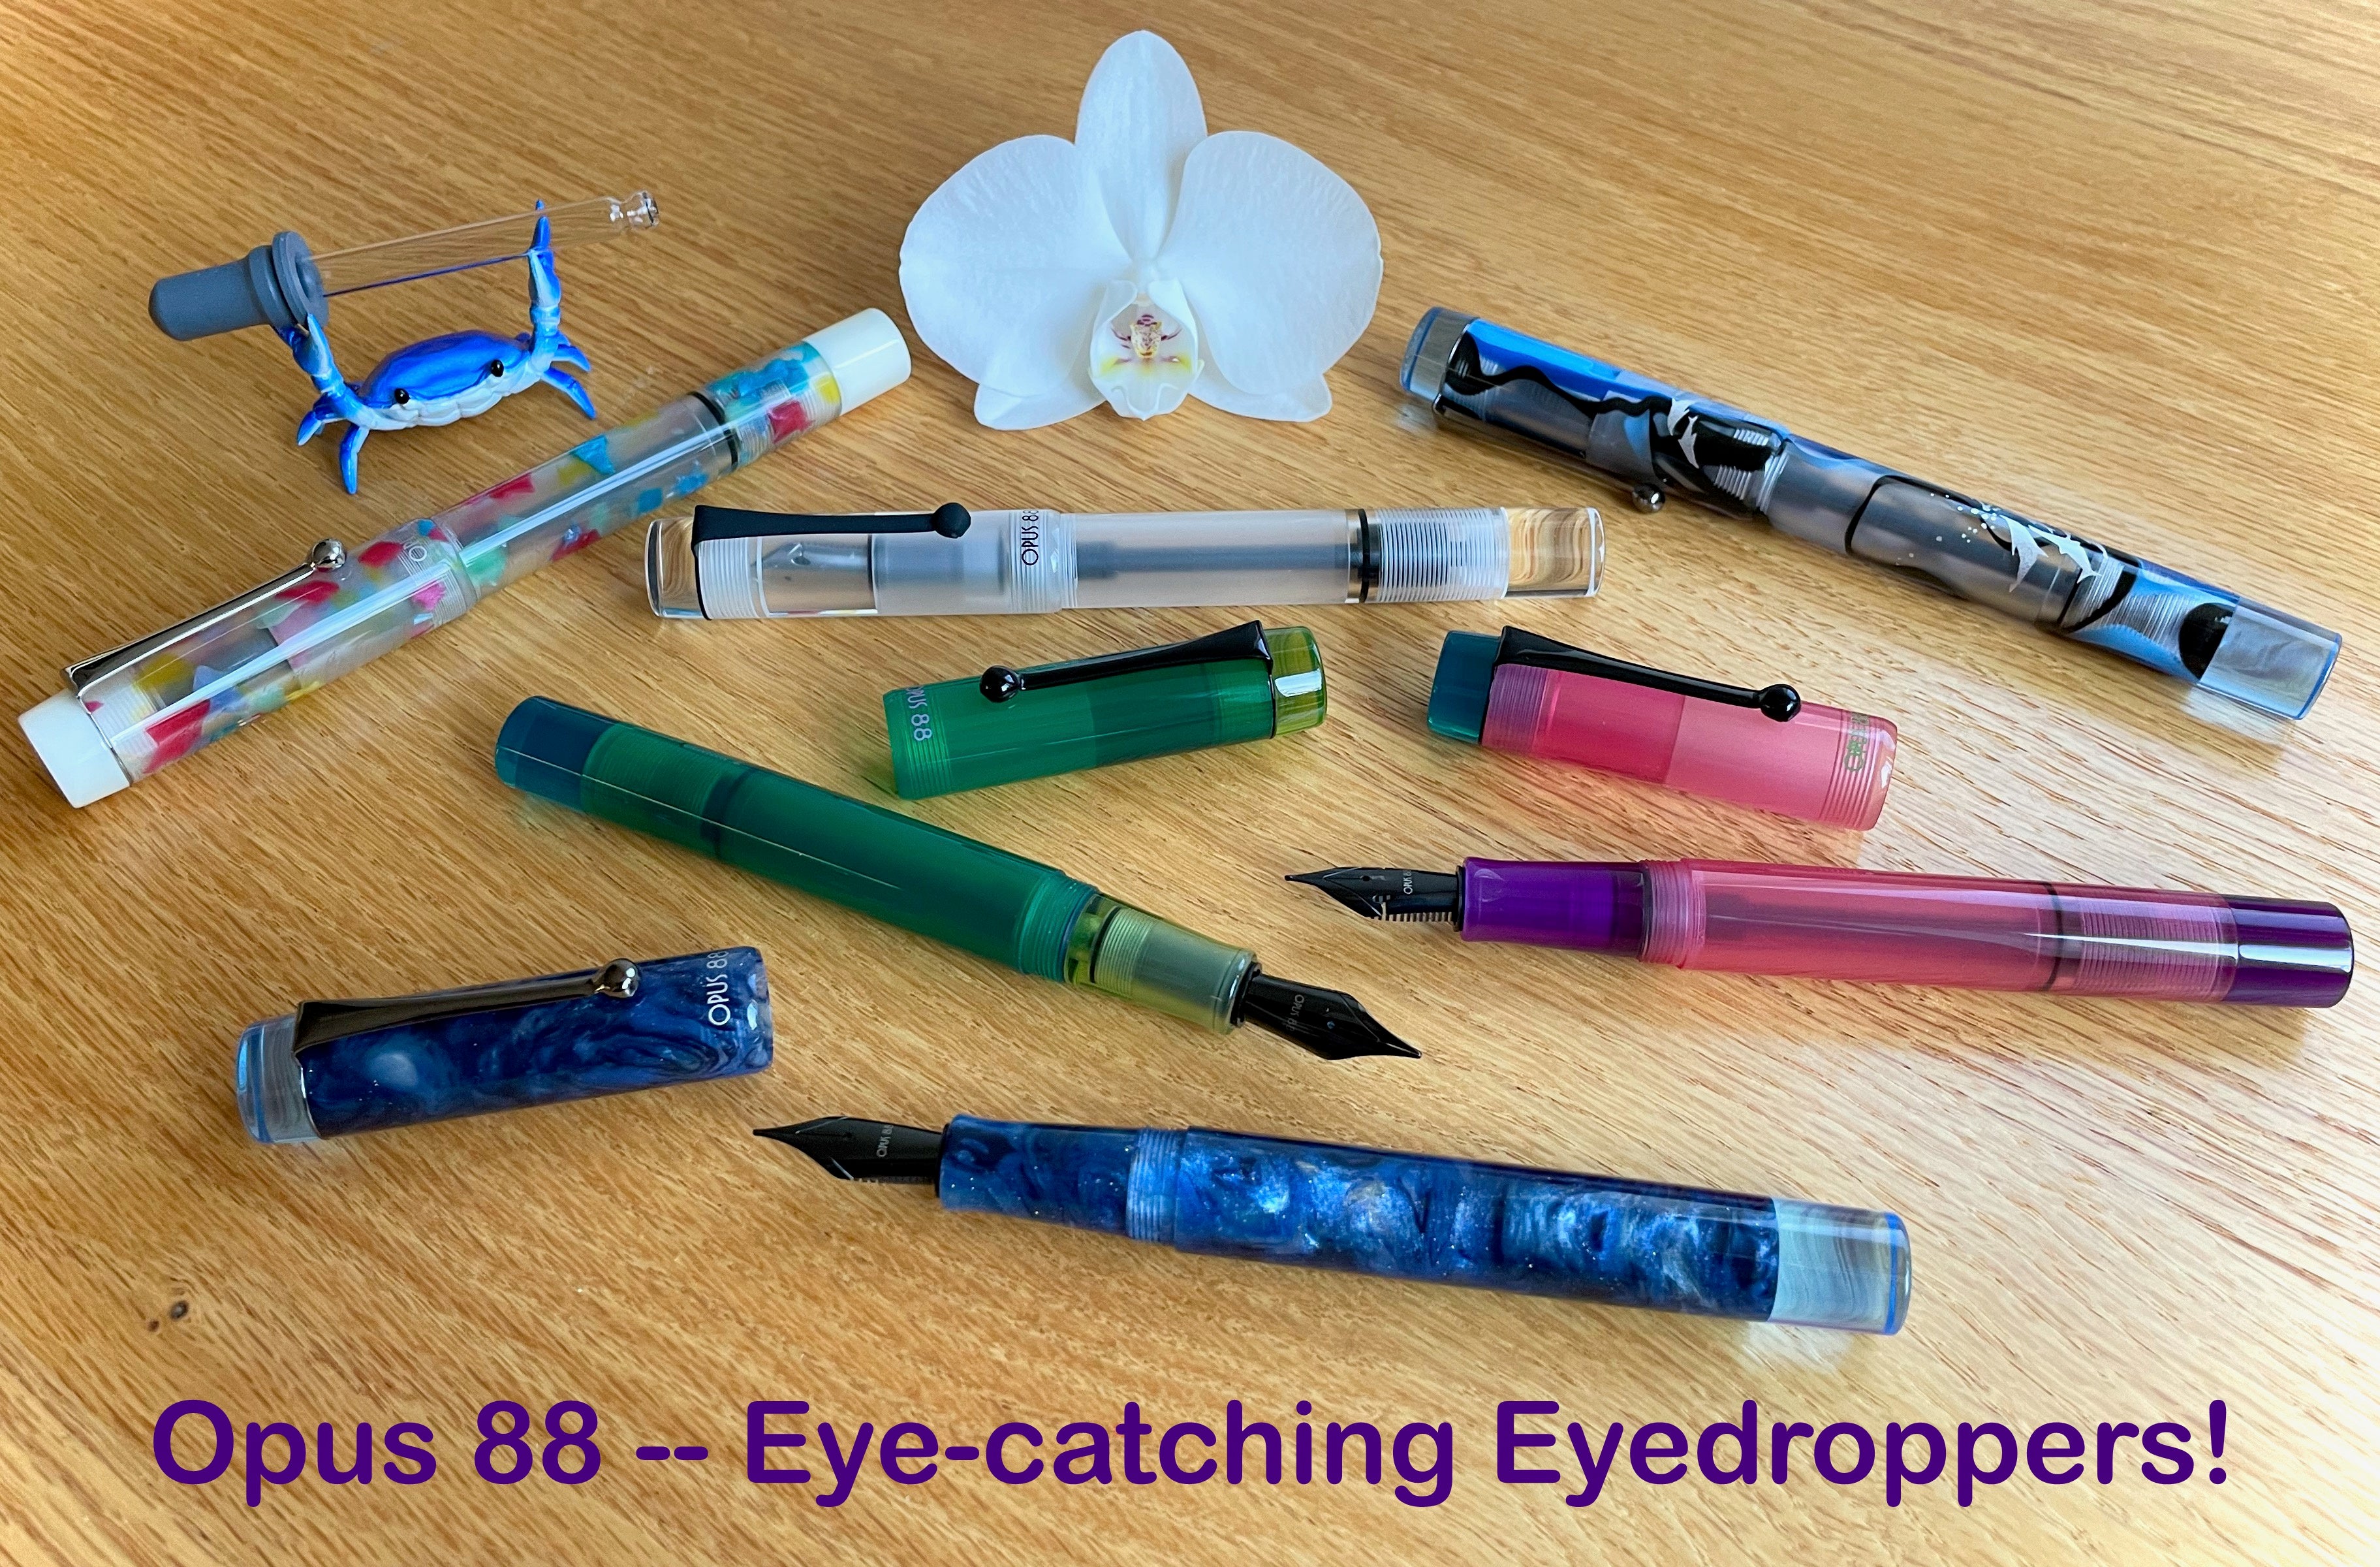 Opus 88 -- Eye-catching Eyedroppers!